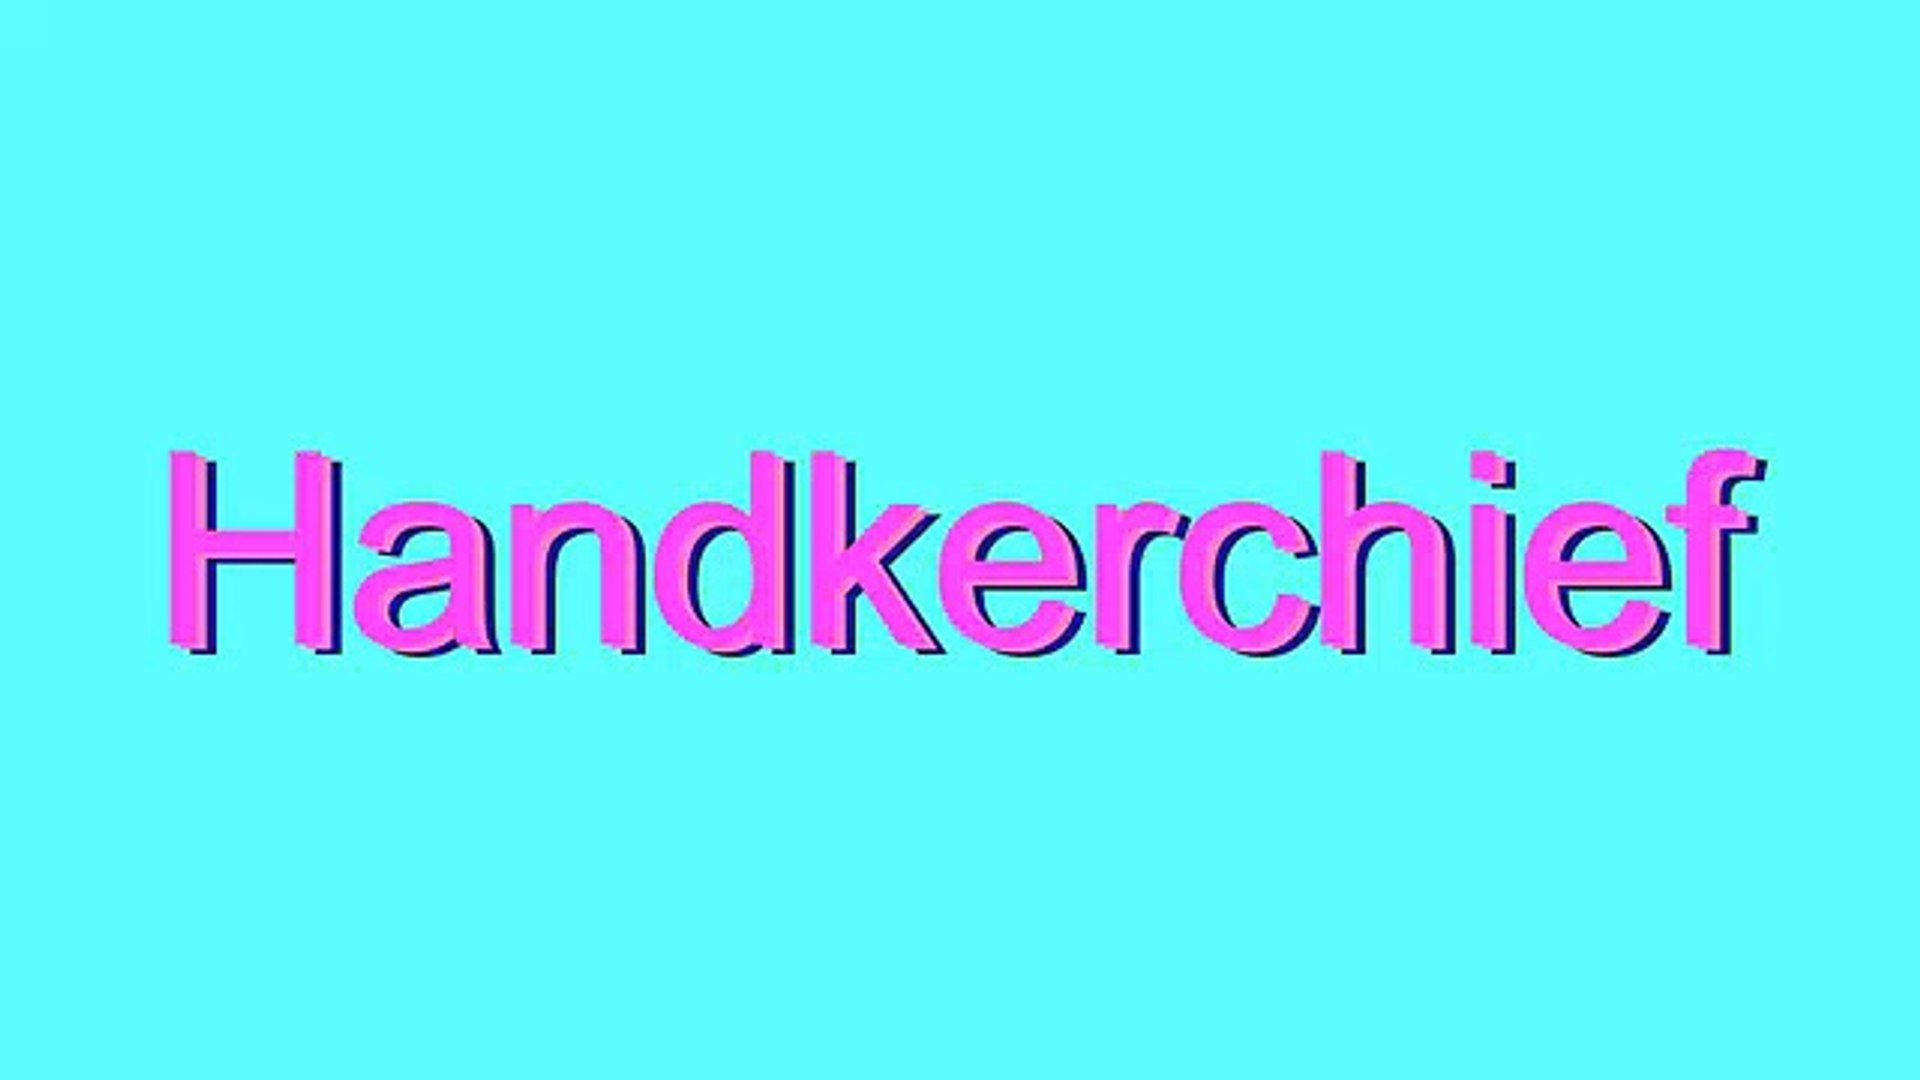 How to Pronounce Handkerchief